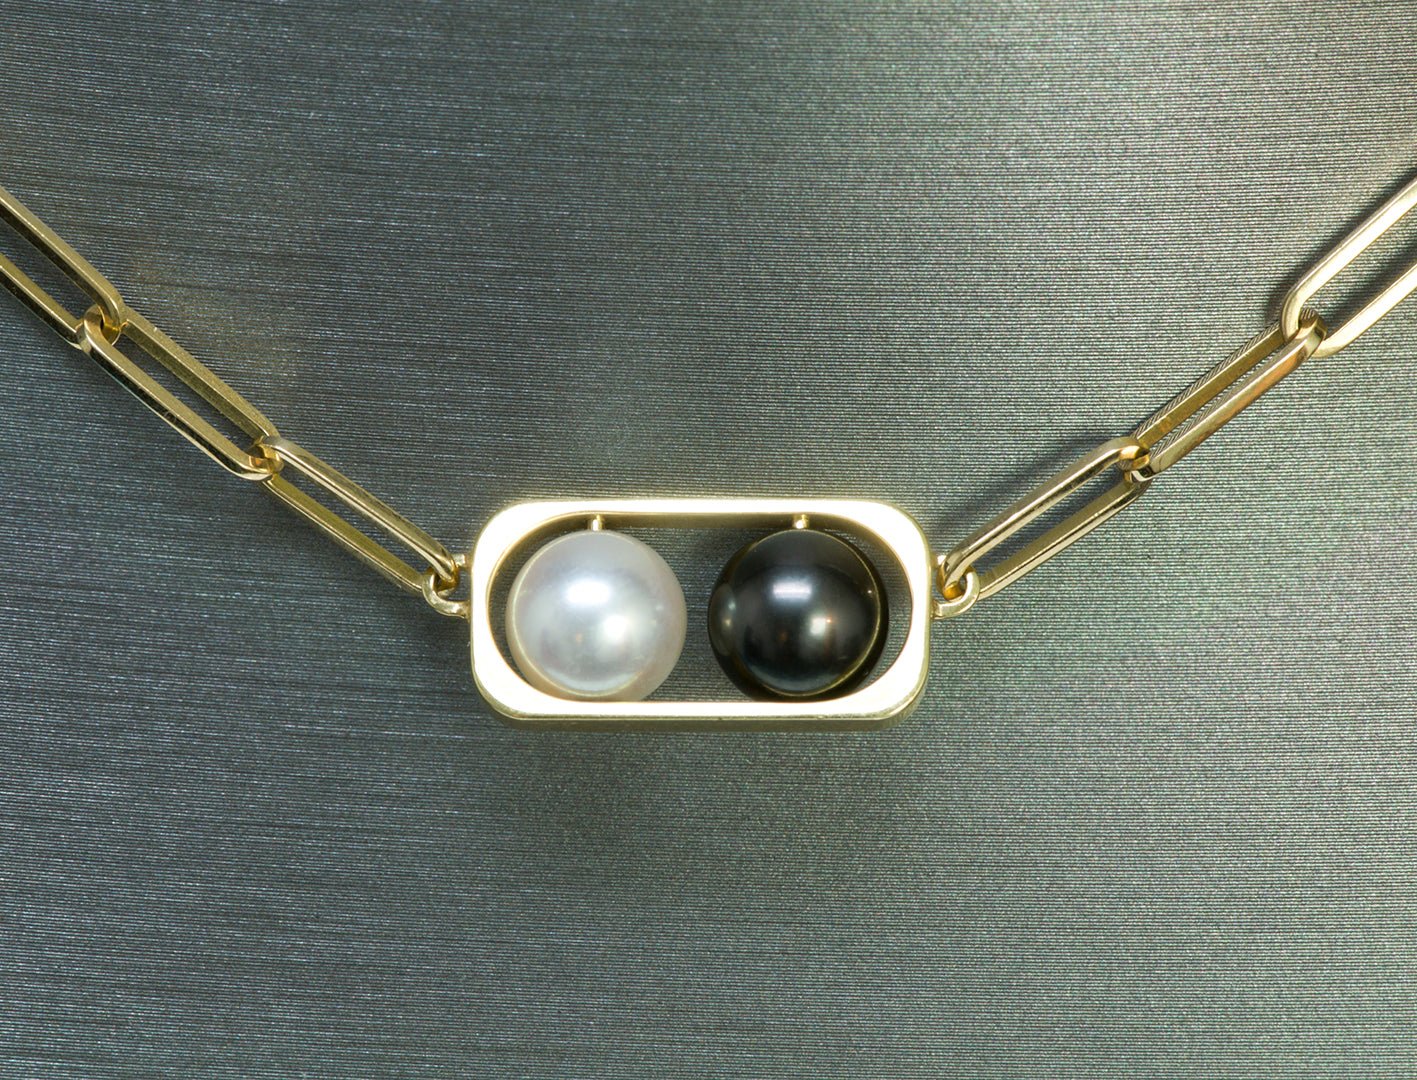 Dinh Van Pearl Gold Ring & Necklace Set